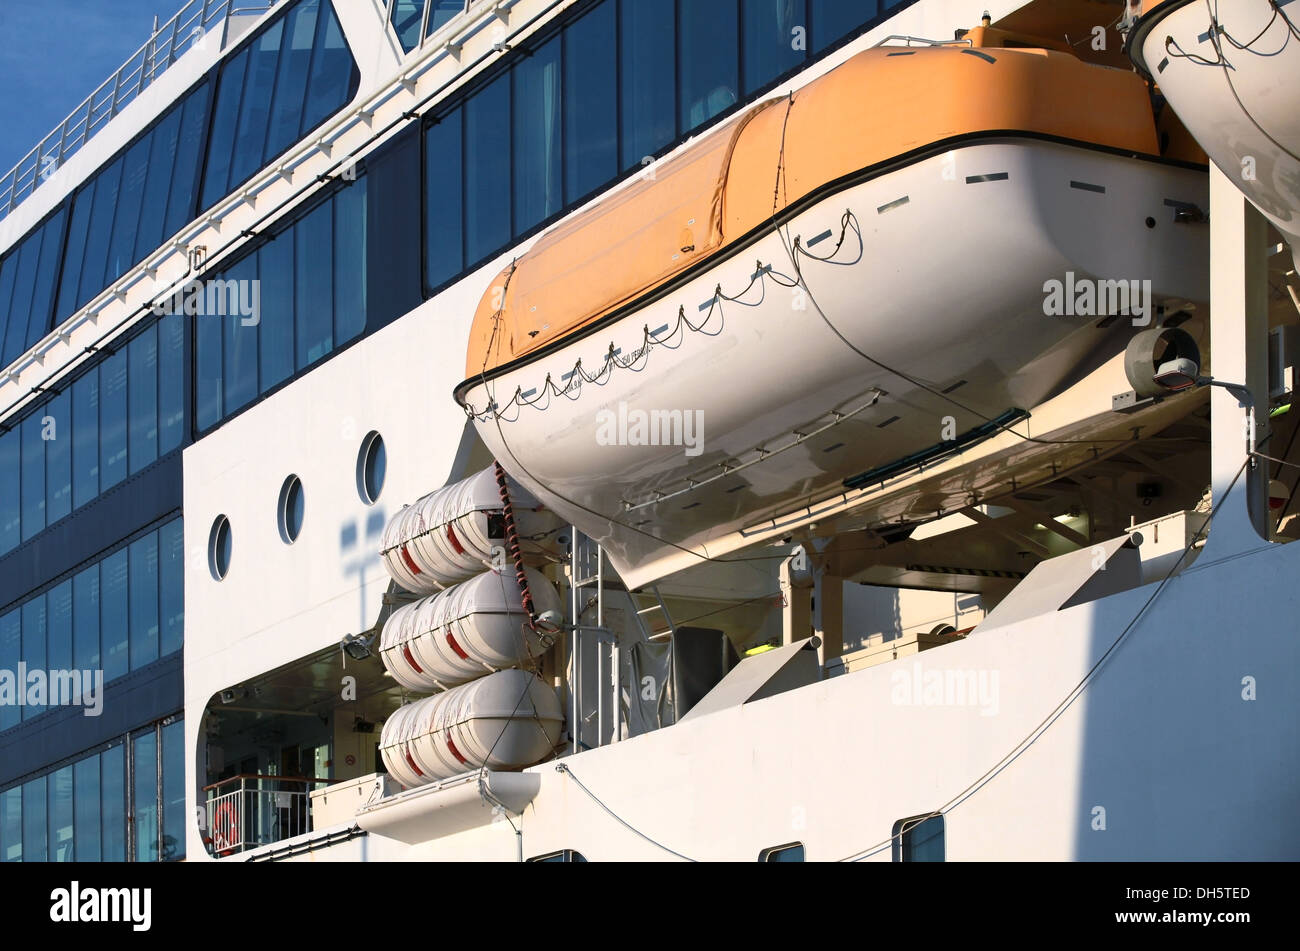 Safety equipment on white modern passenger ferry Stock Photo